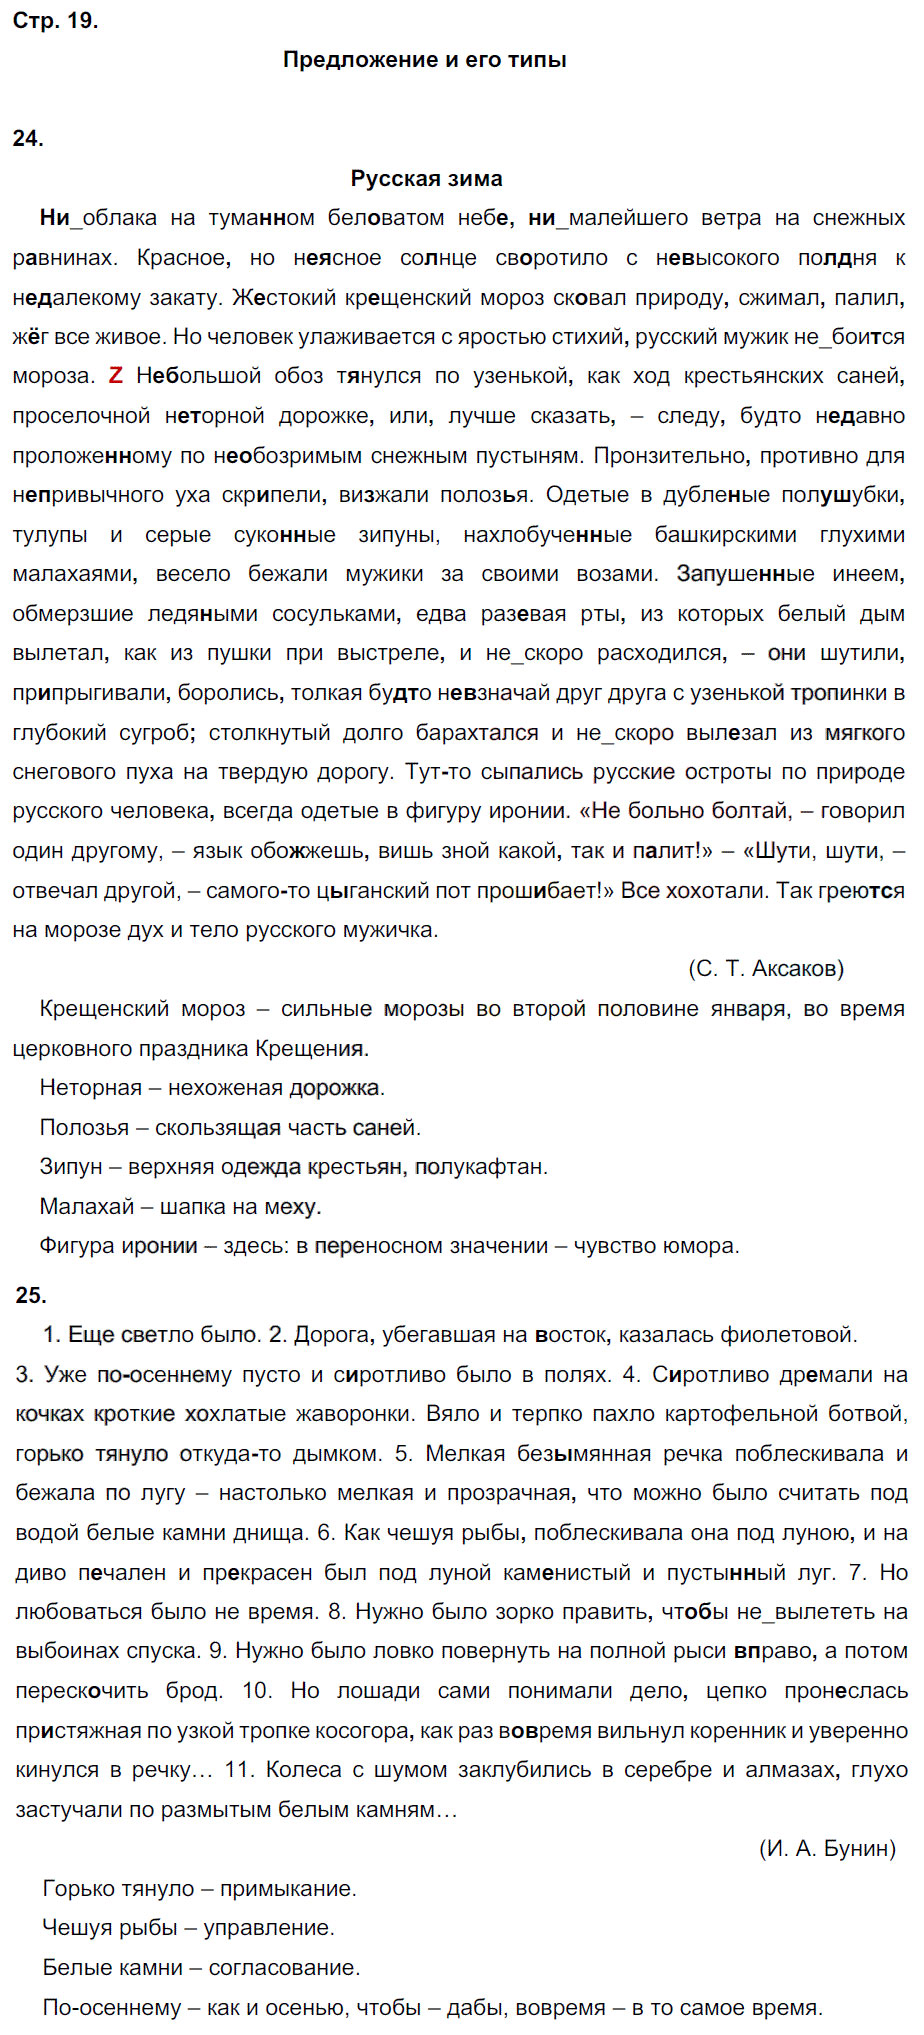 гдз 8 класс рабочая тетрадь страница 19 русский язык Кулаева